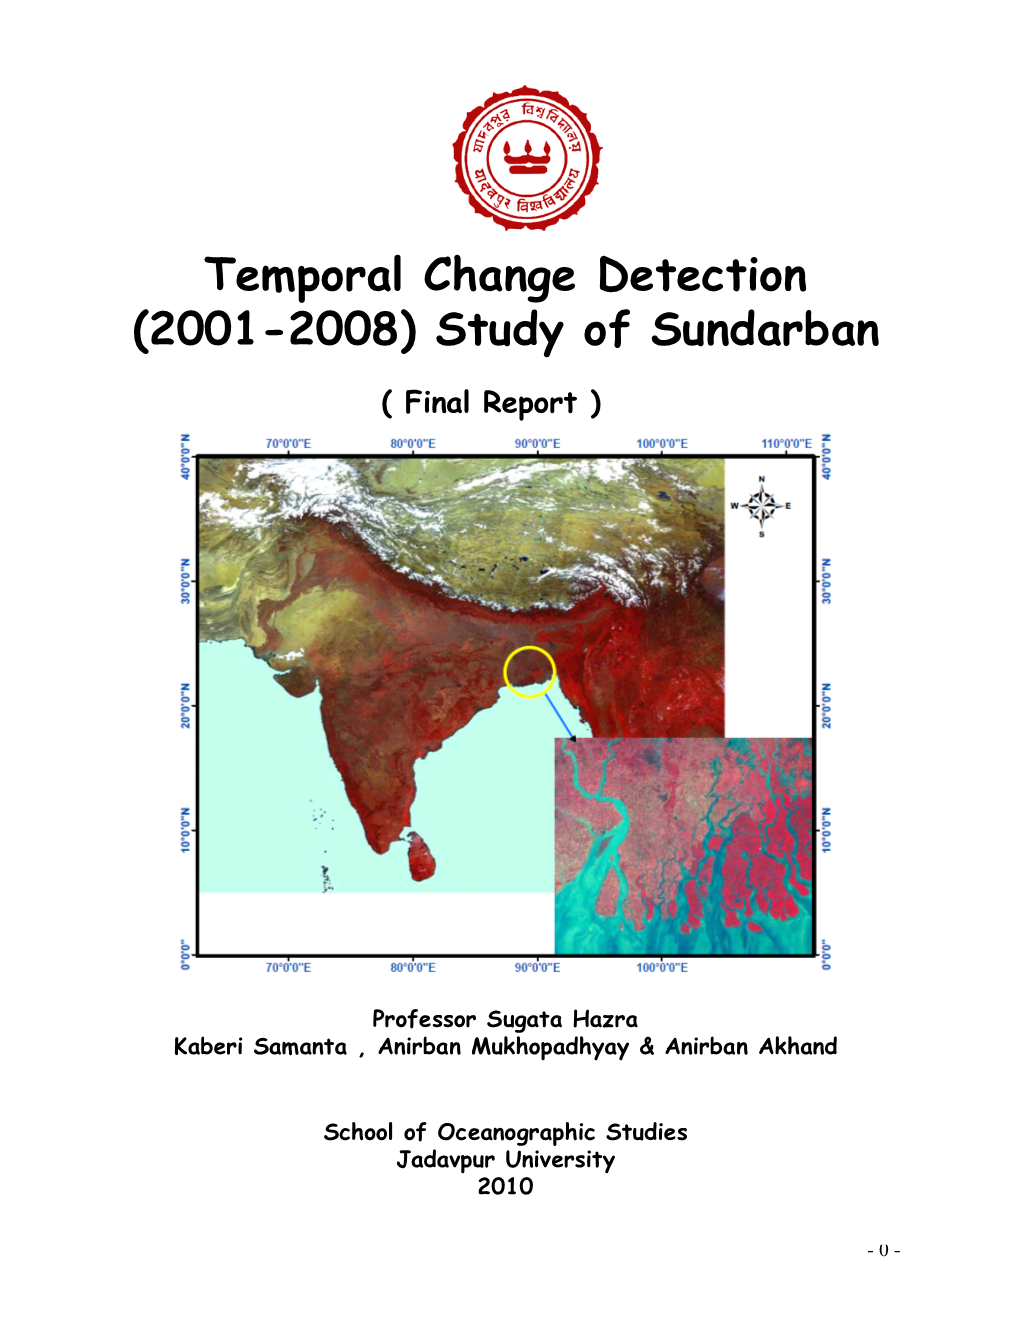 Temporal Change Detection (2001-2008) Study of Sundarban